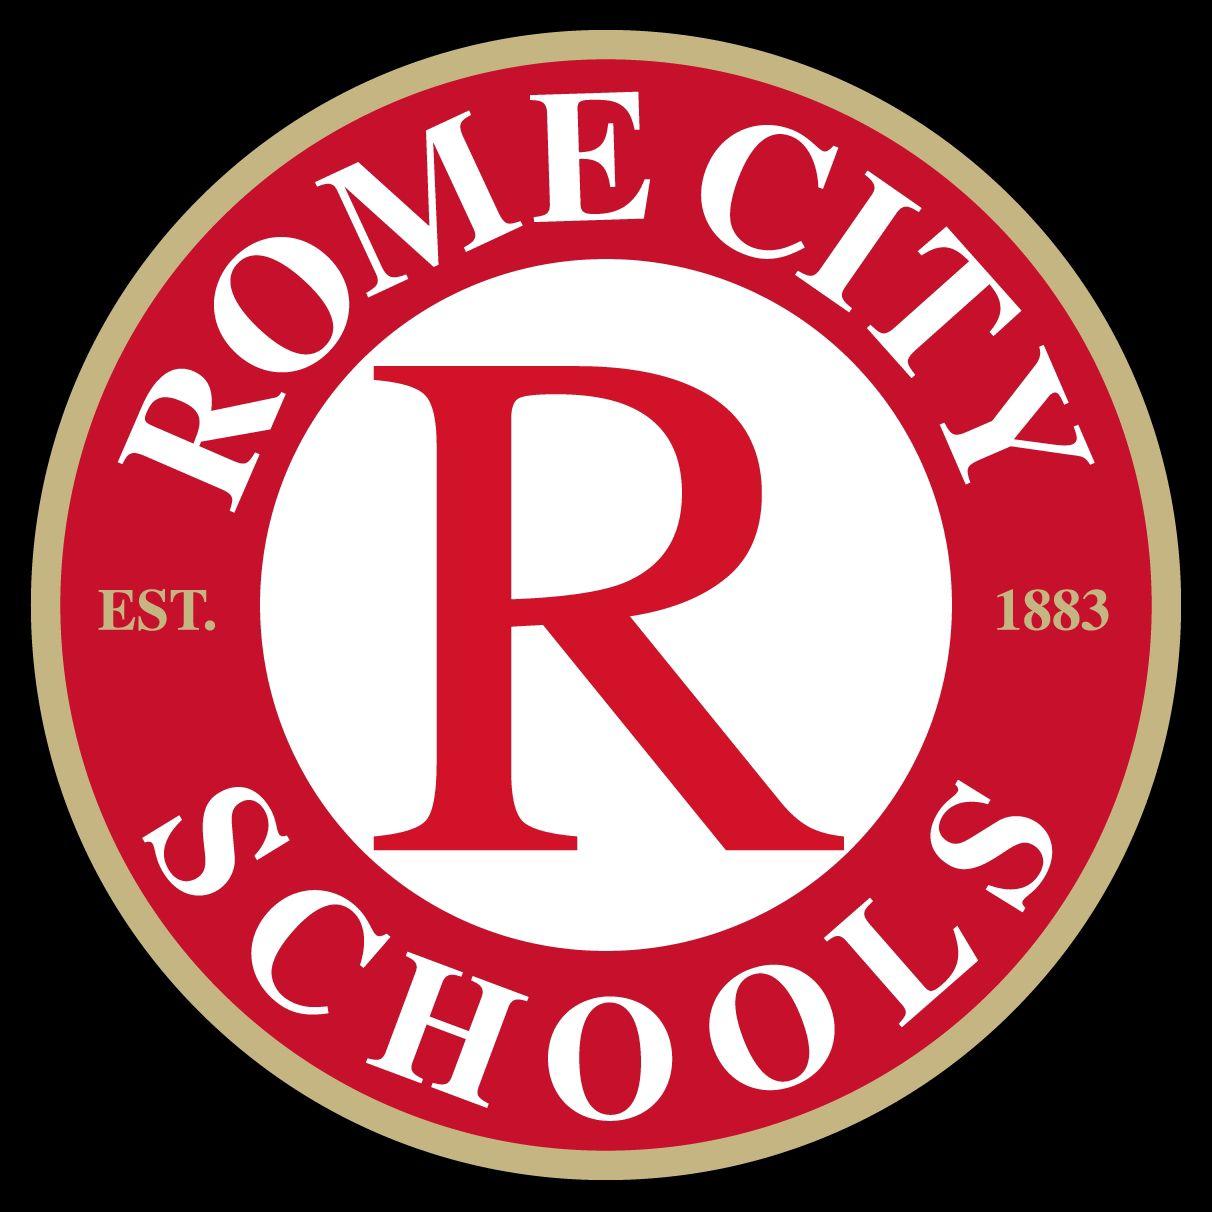 Rome City Schools moves forward with alternative discipline plan